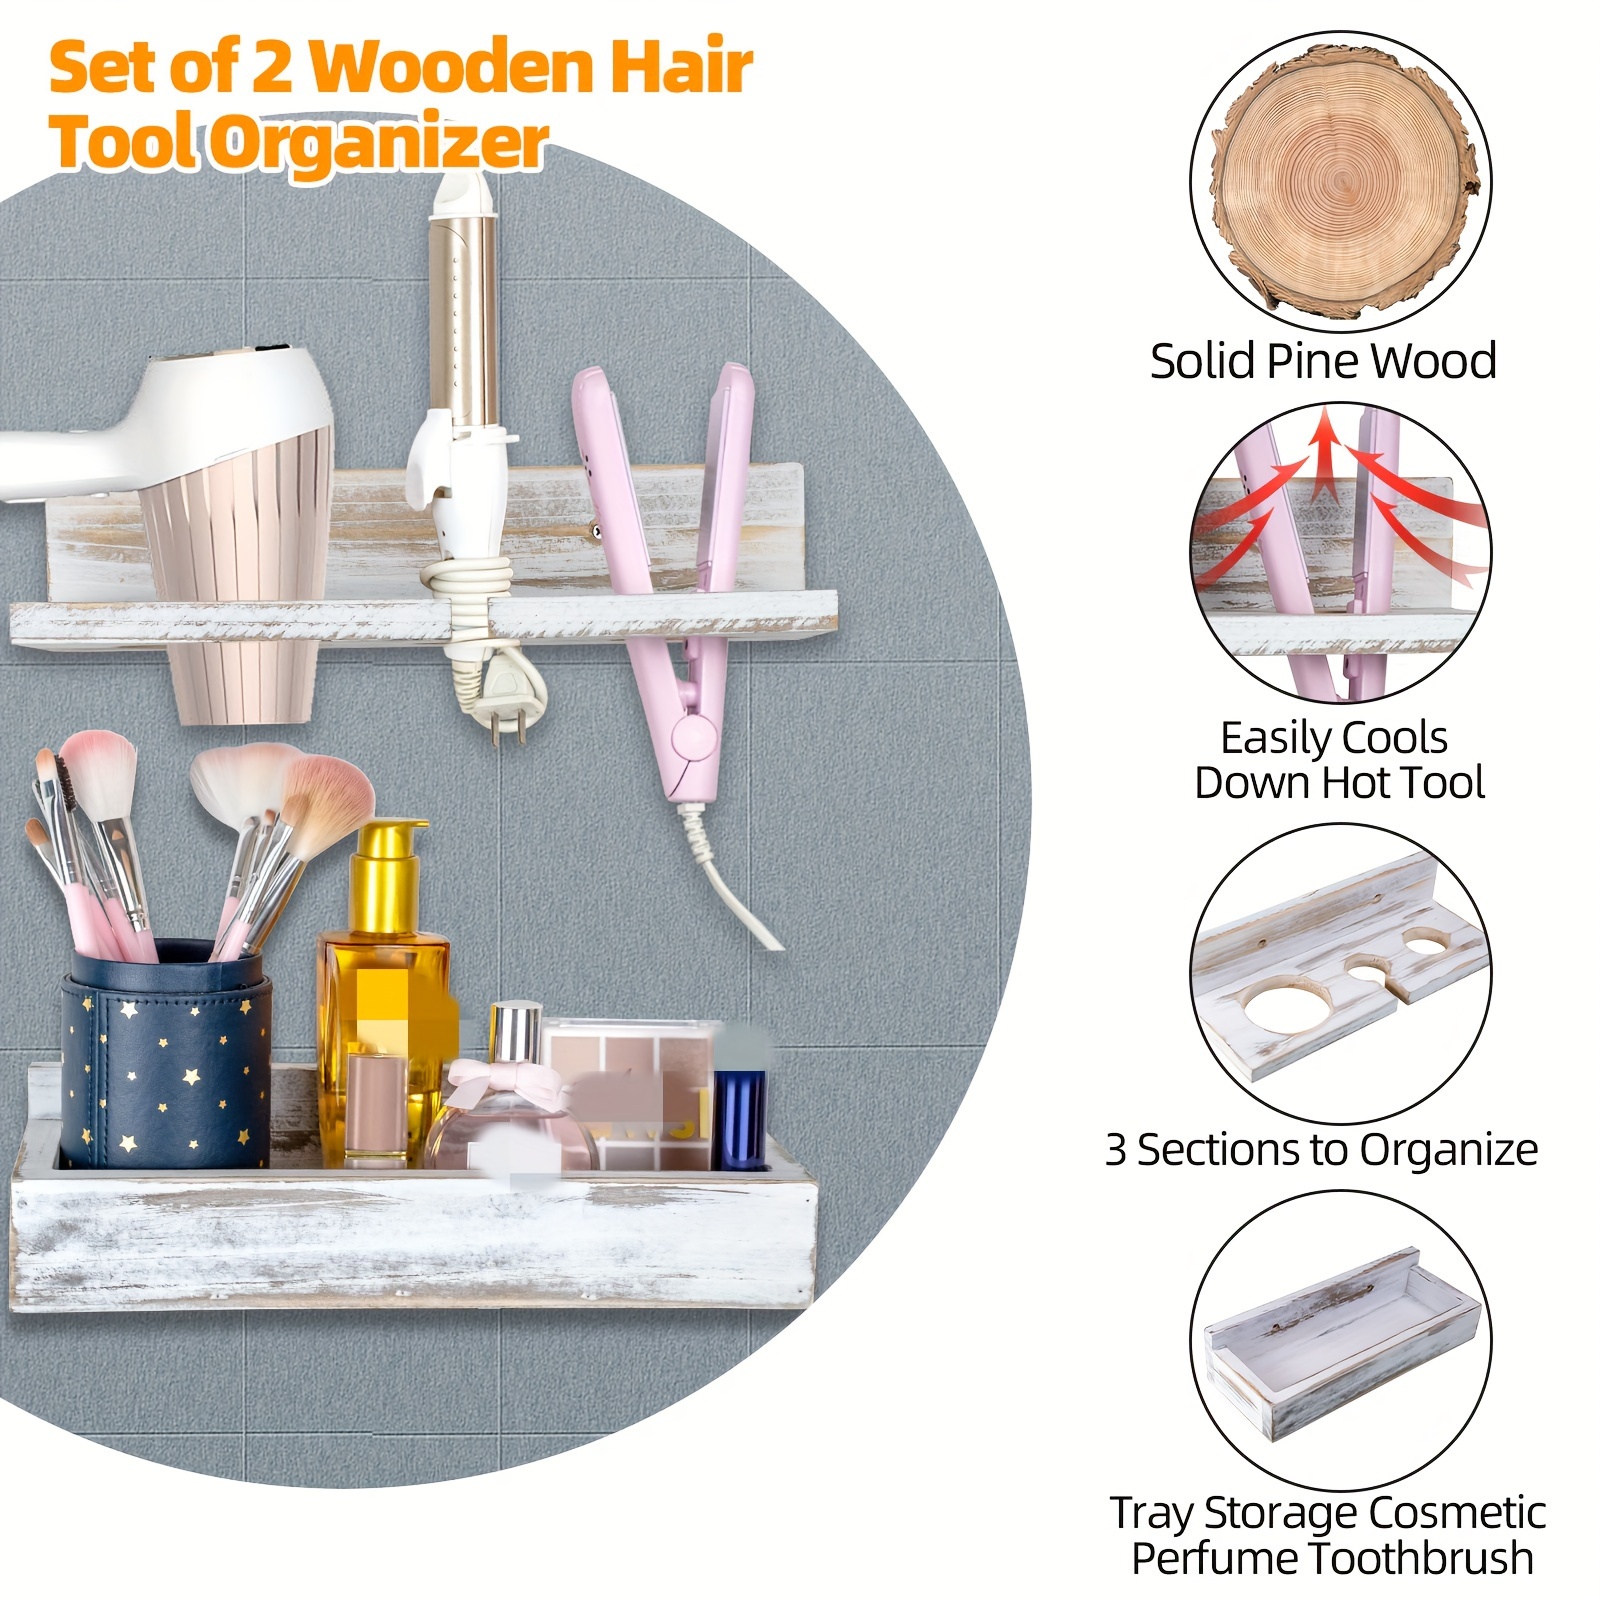 Hair Tool Organizer Wall Mounted - Wooden Hair Dryer Holder